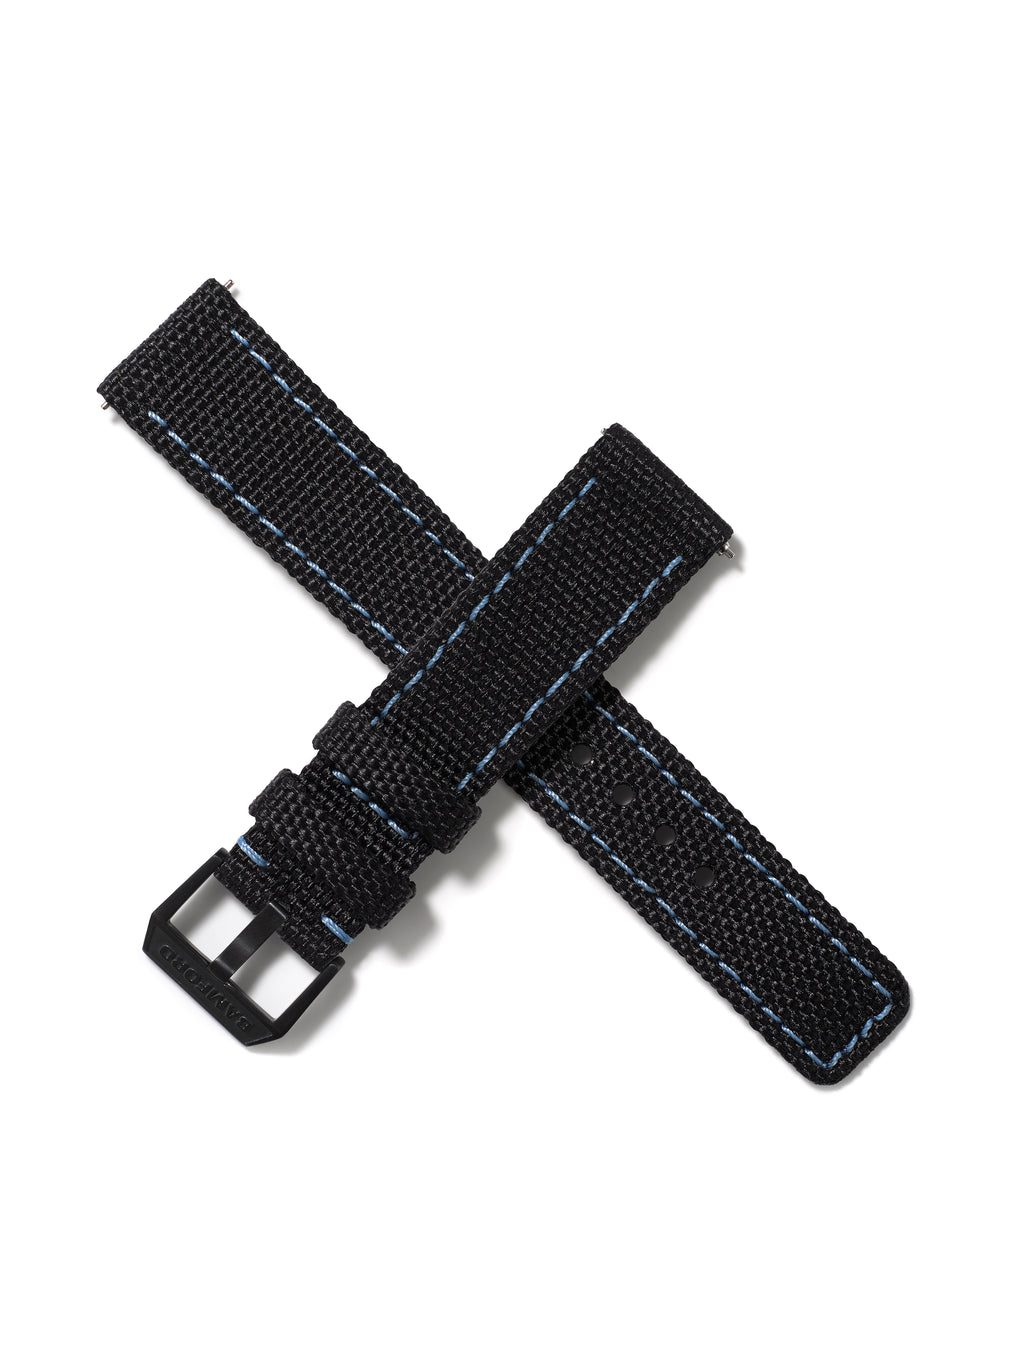 20mm Cordura Strap - Black with Light Blue Stitch